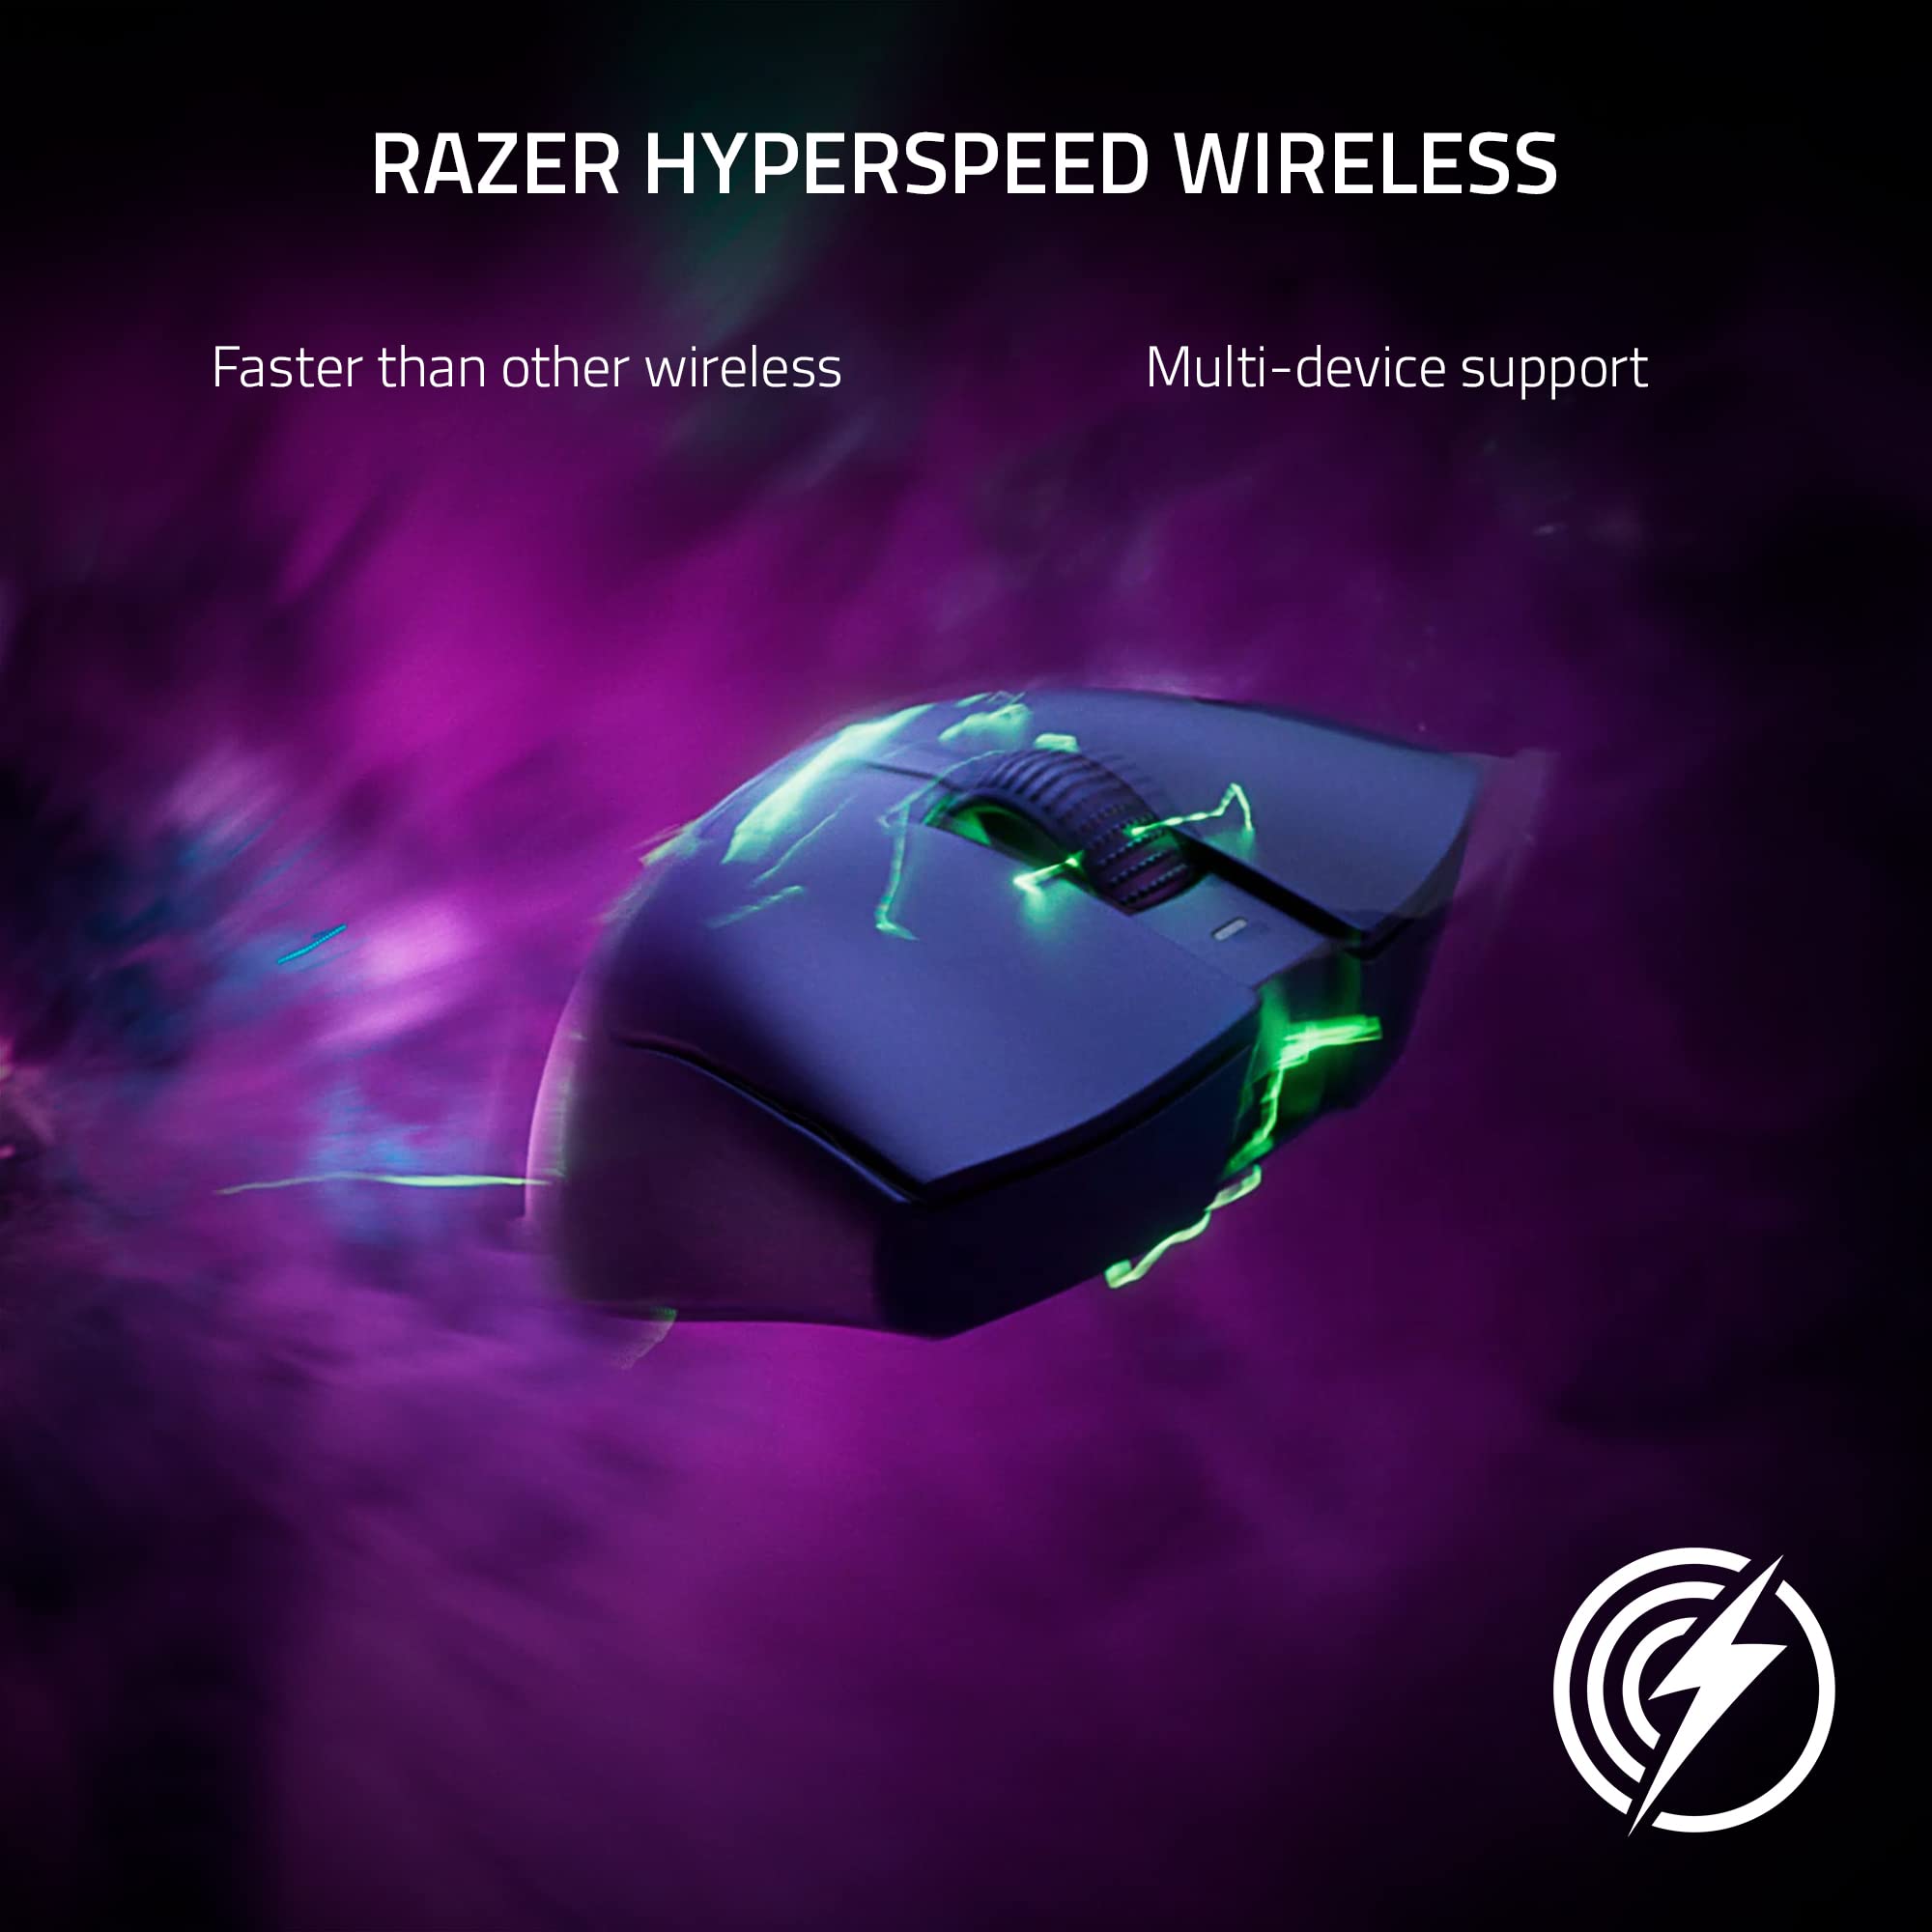 Razer DeathAdder V3 Pro Gaming Mouse: 64g Ultra Lightweight - Focus Pro 30K Optical Sensor - Fast Optical Switches Gen-3 - HyperSpeed Wireless - 5 Programmable Buttons - 90 Hr Battery - White